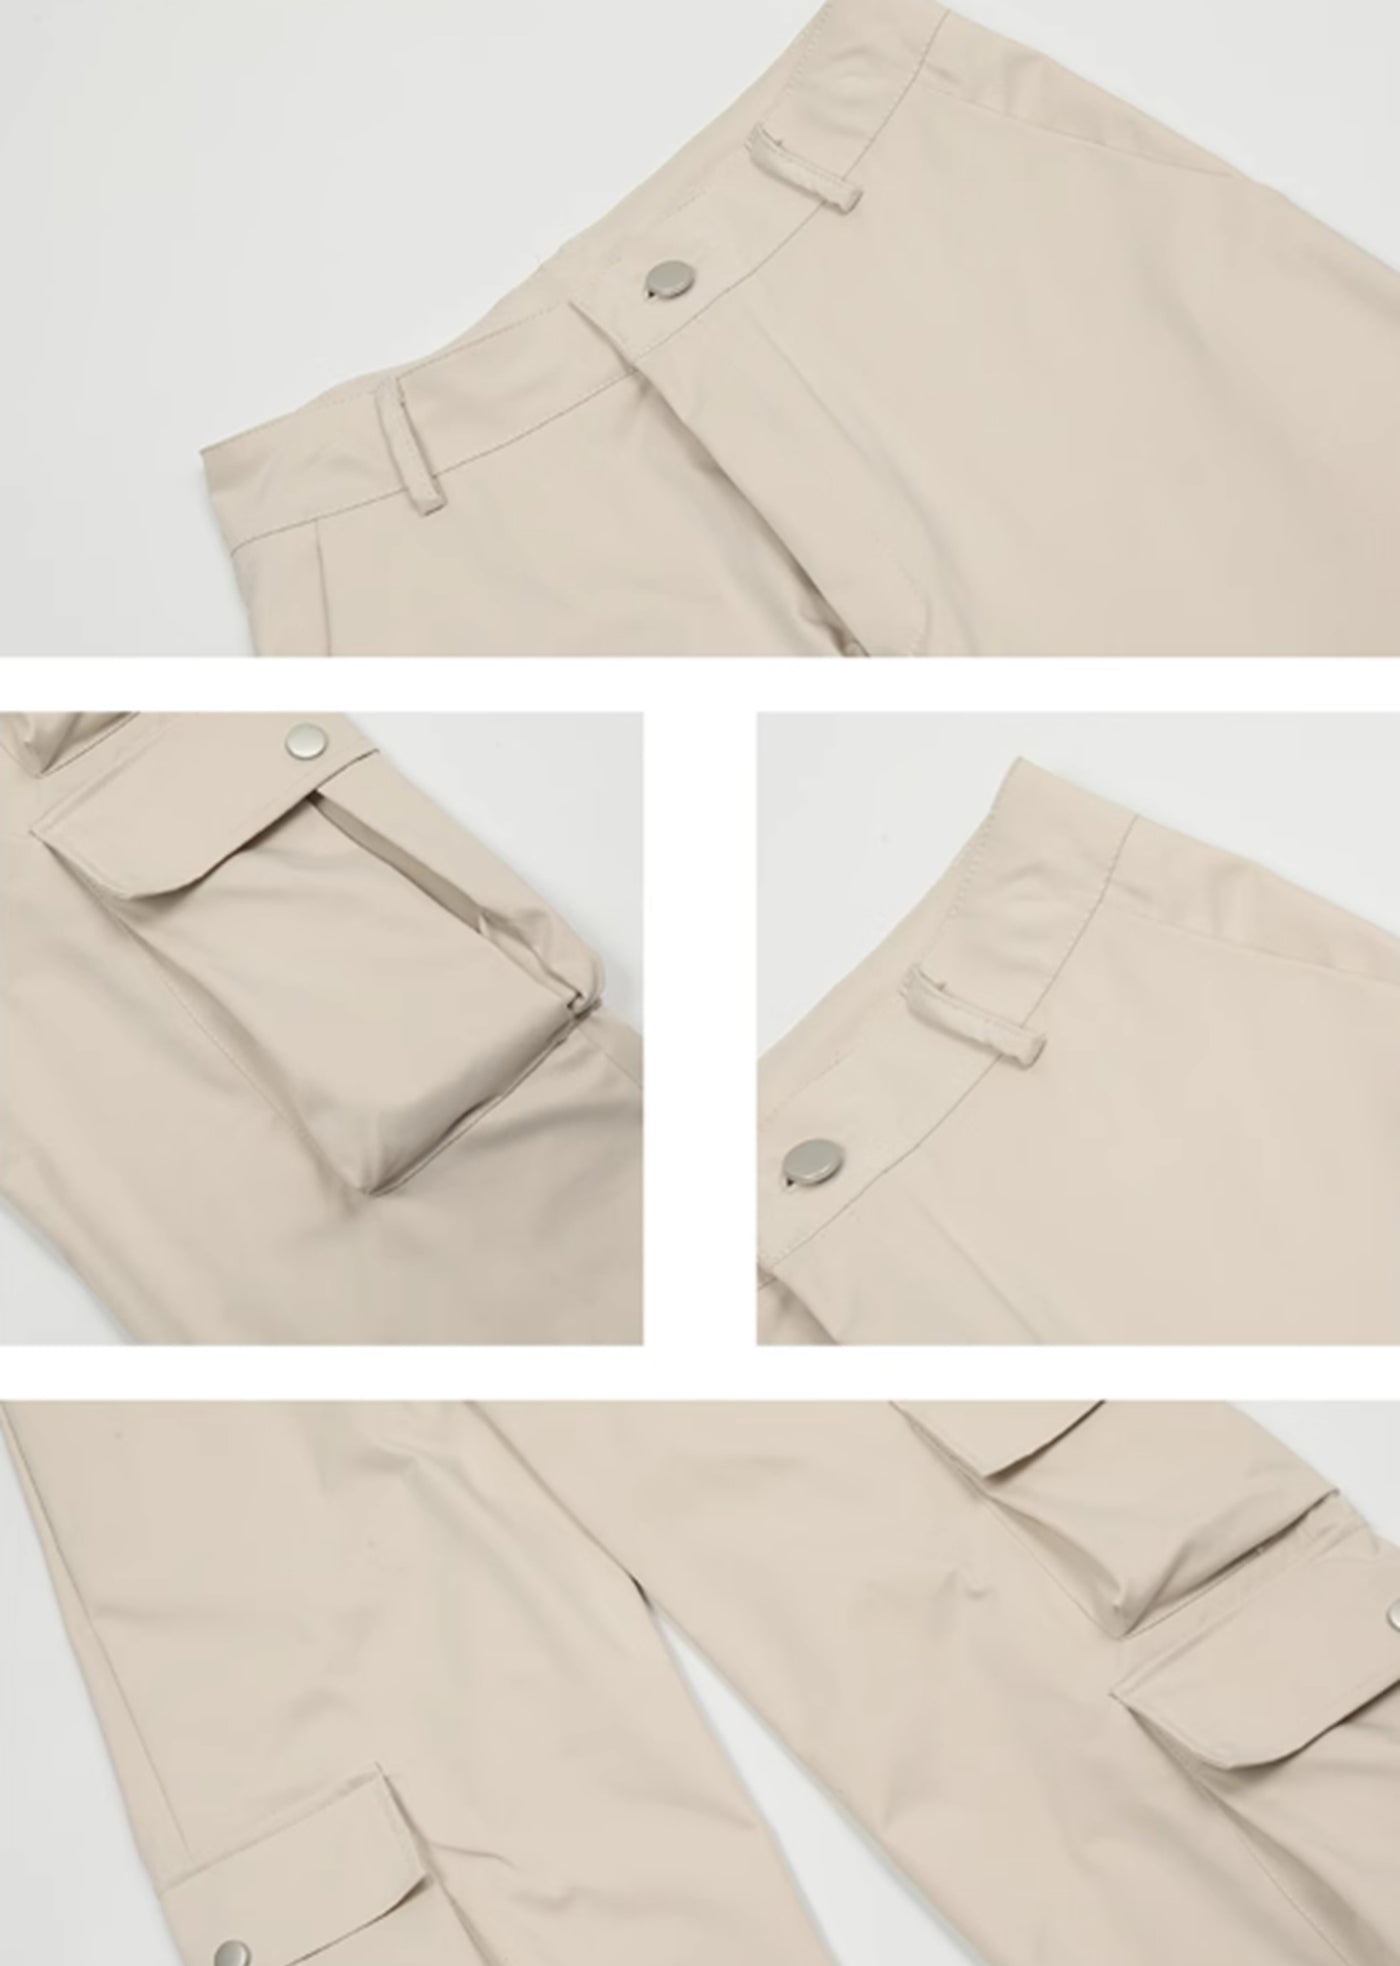 【Apocket】Double side pocket design natural cargo pants  AK0026